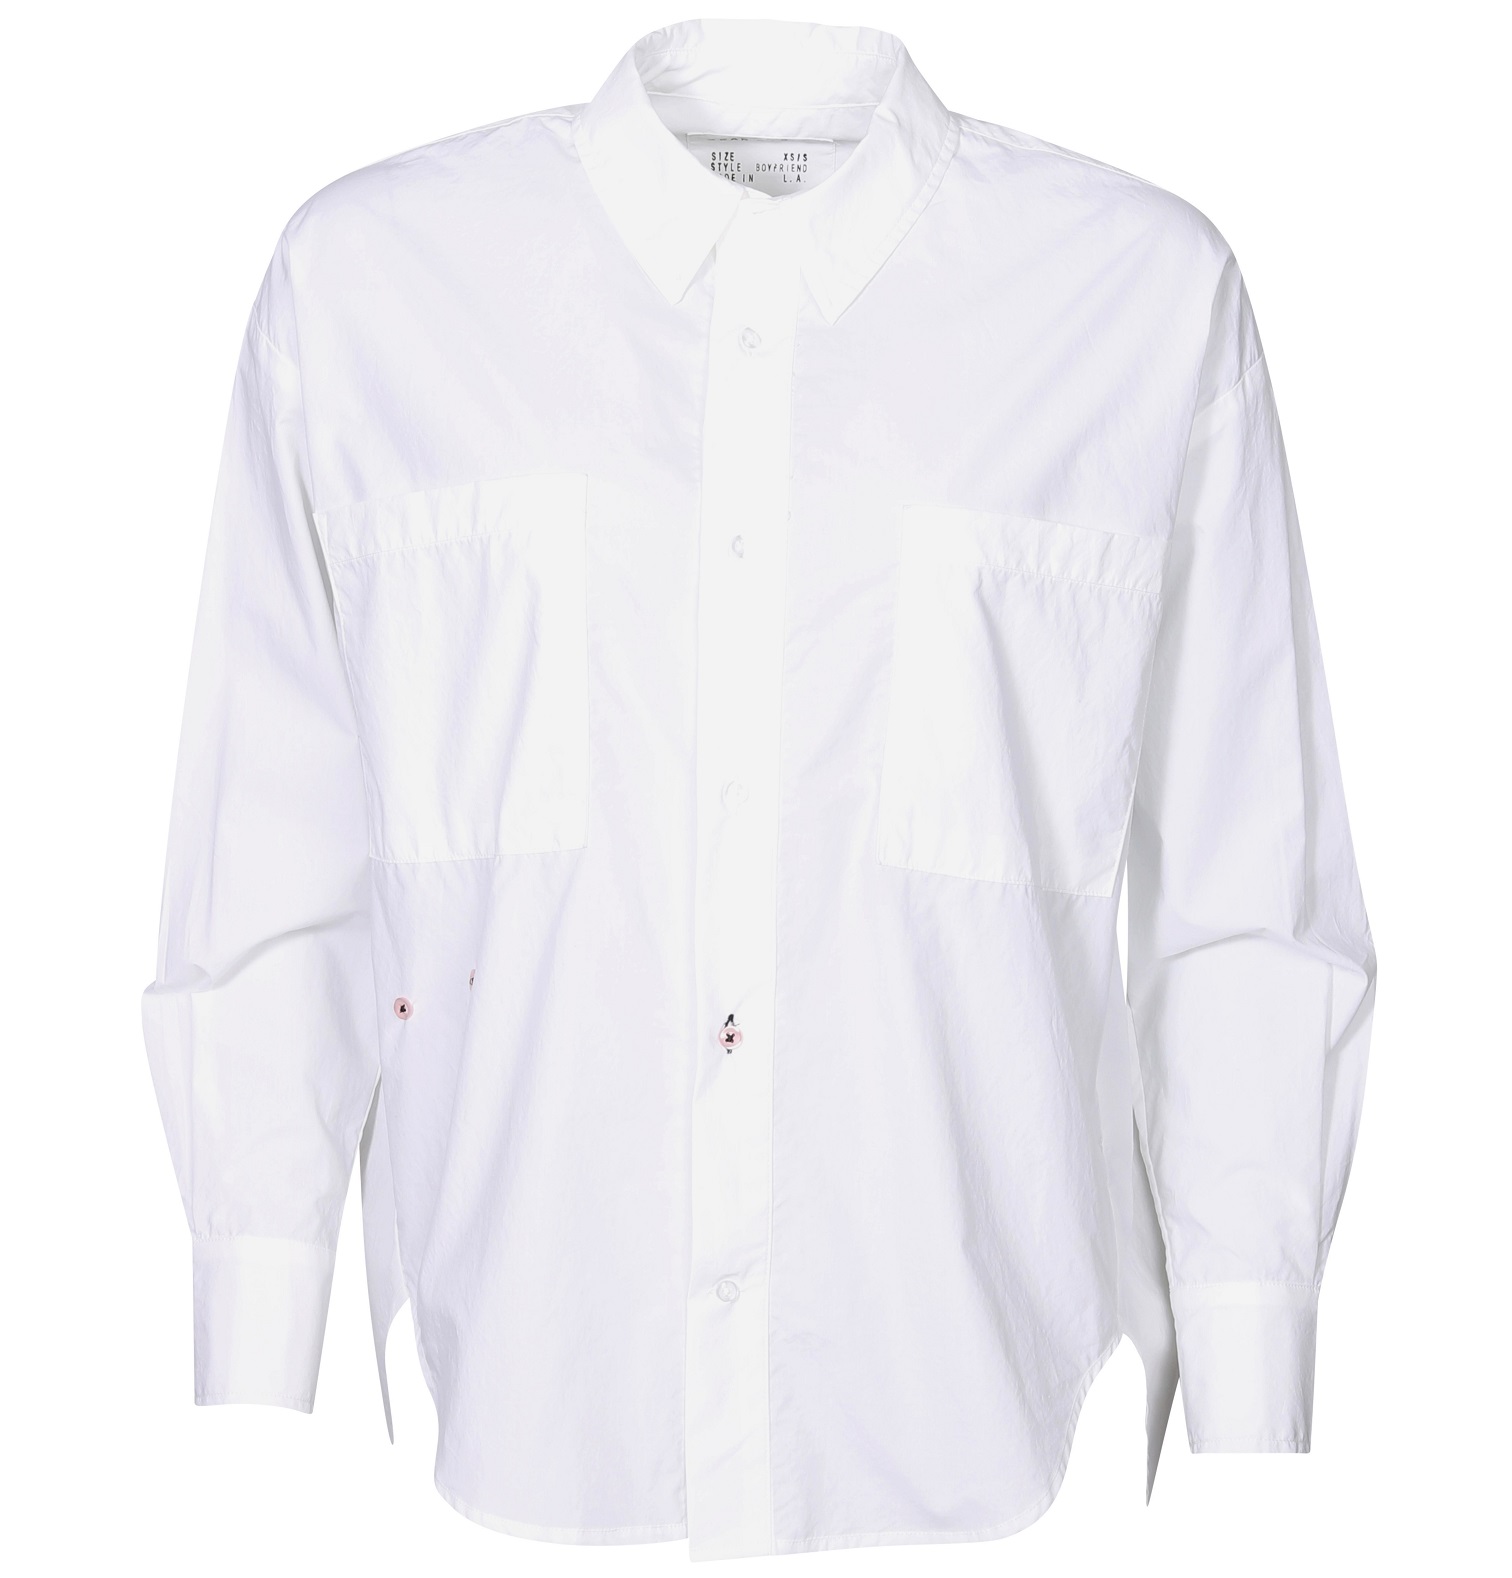 WEARCISCO The Boyfriend Shirt in White XS/S